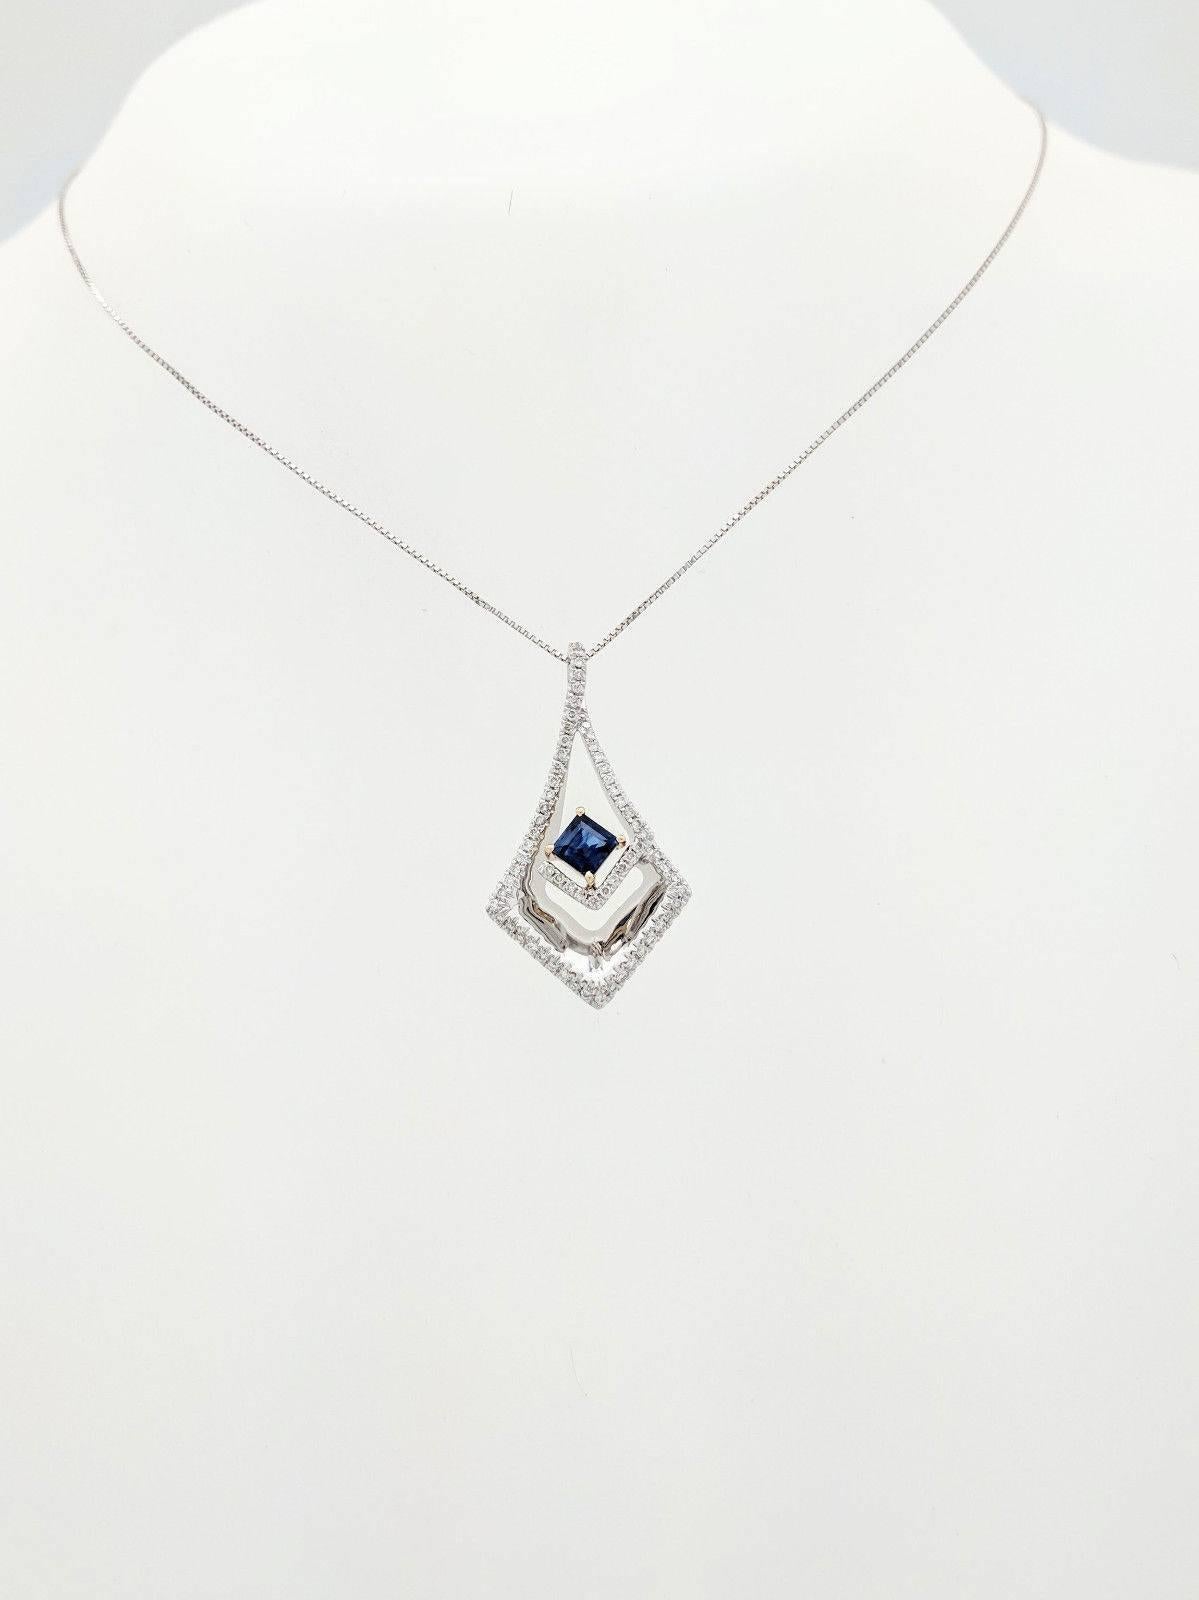  Stunning Ladies 14k Two-Tone Diamond & Sapphire Pendant Necklace 18